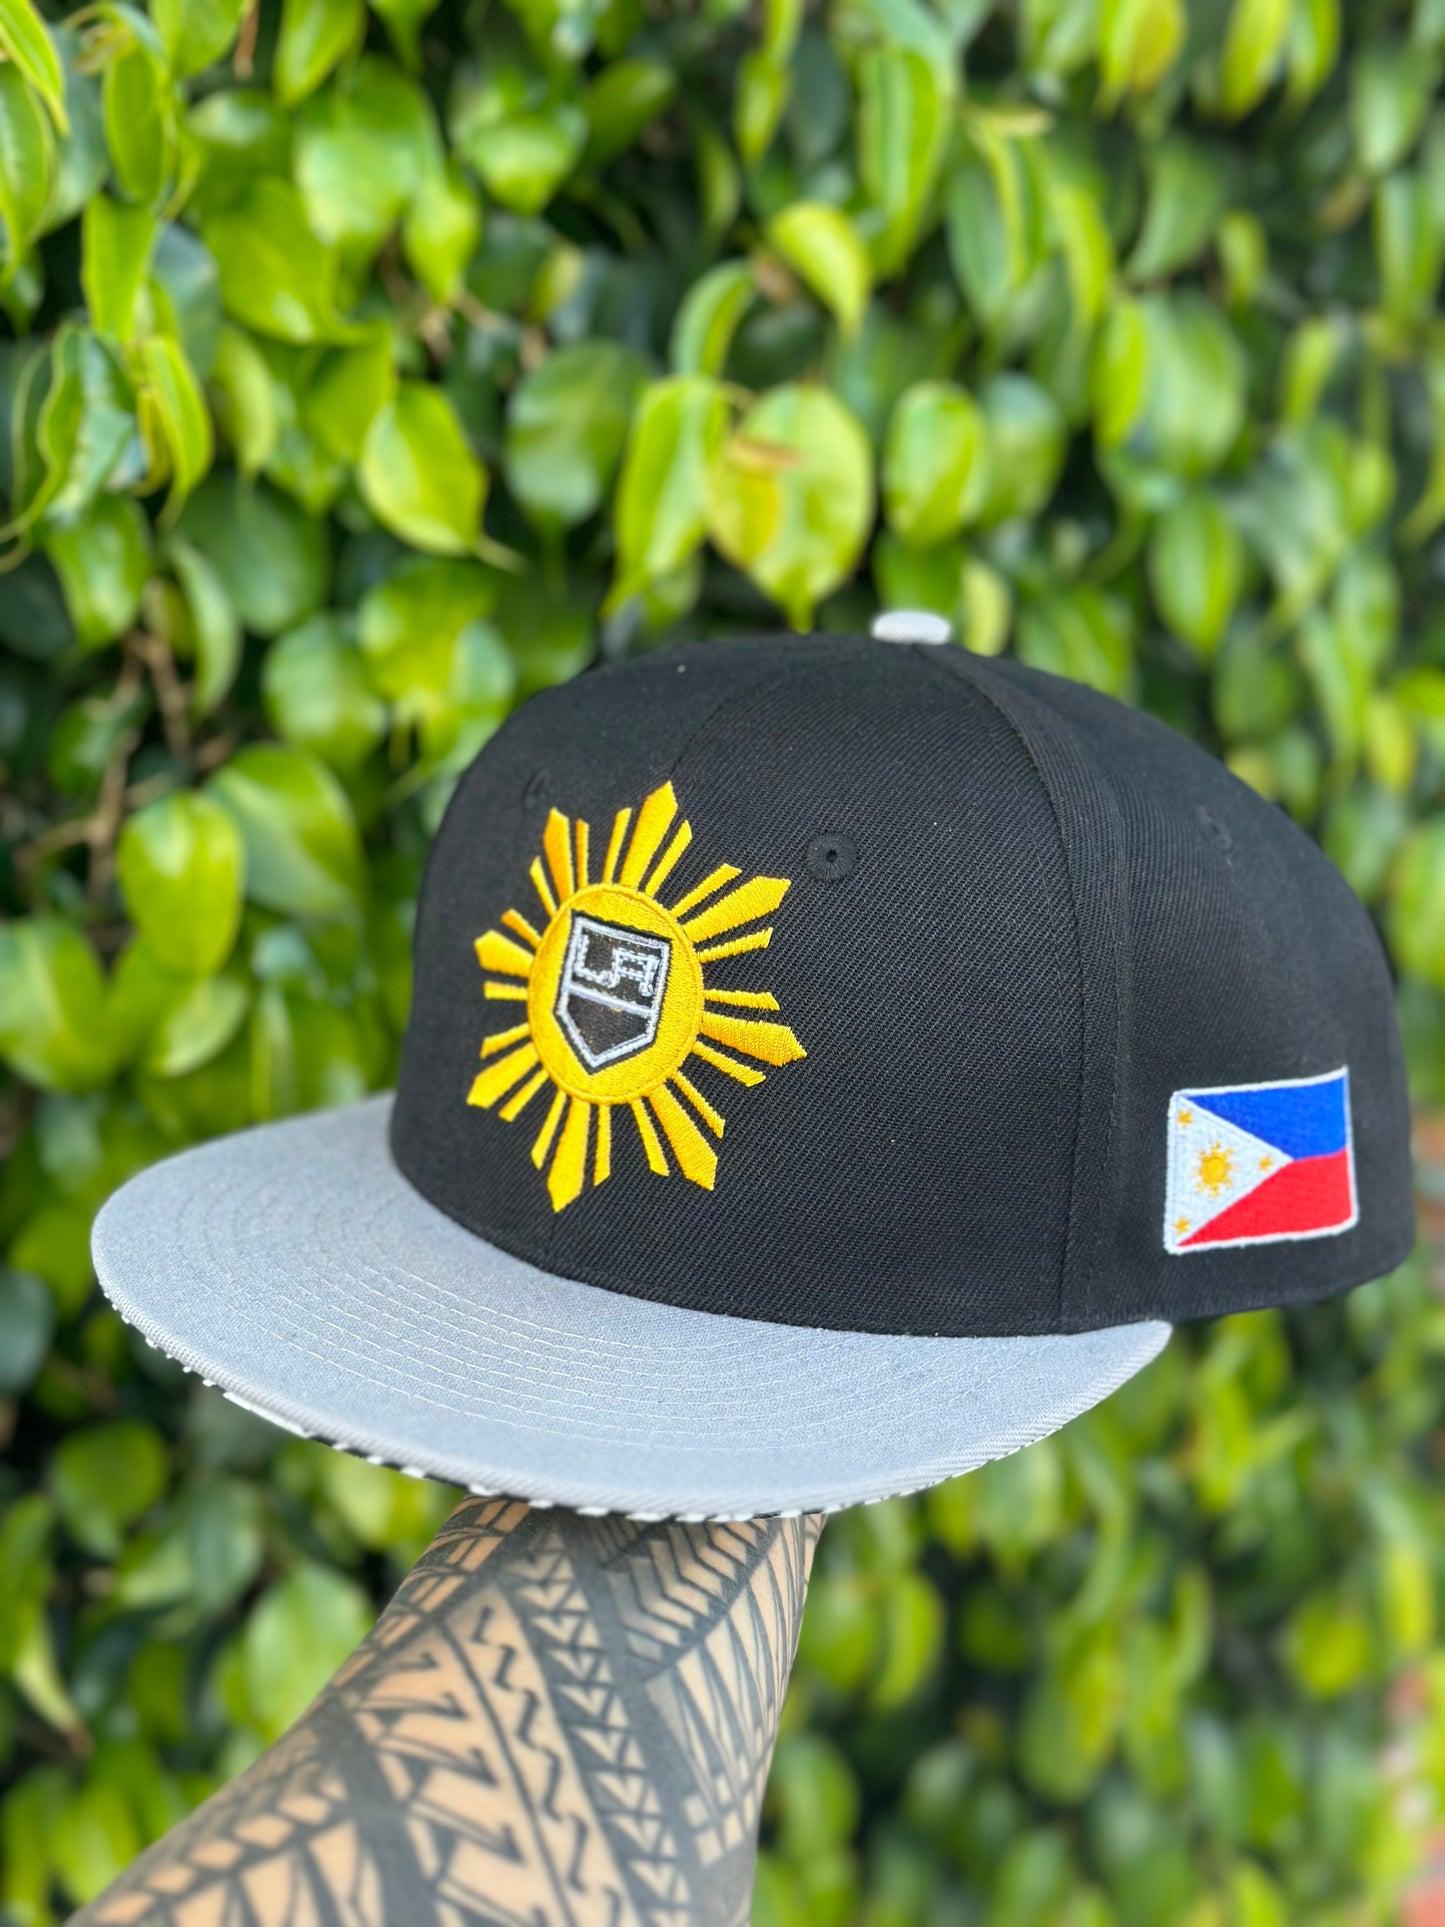 “LA KINGS” Filipino Heritage Night Philippines Snap Back Hat